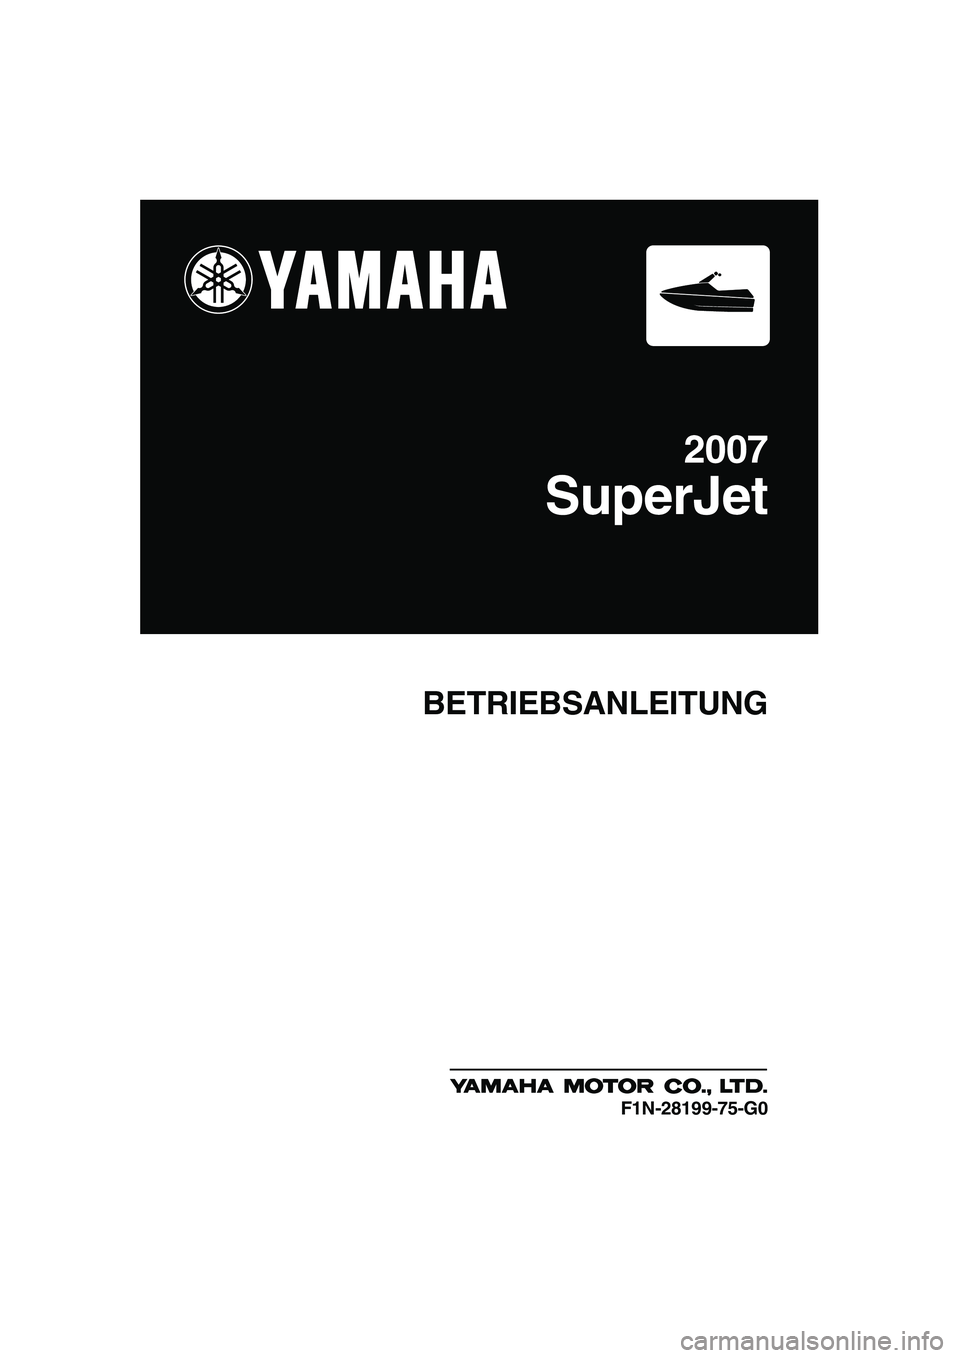 YAMAHA SUPERJET 2007  Betriebsanleitungen (in German) BETRIEBSANLEITUNG
2007
SuperJet
F1N-28199-75-G0
UF1N75G0.book  Page 1  Tuesday, May 16, 2006  1:27 PM 